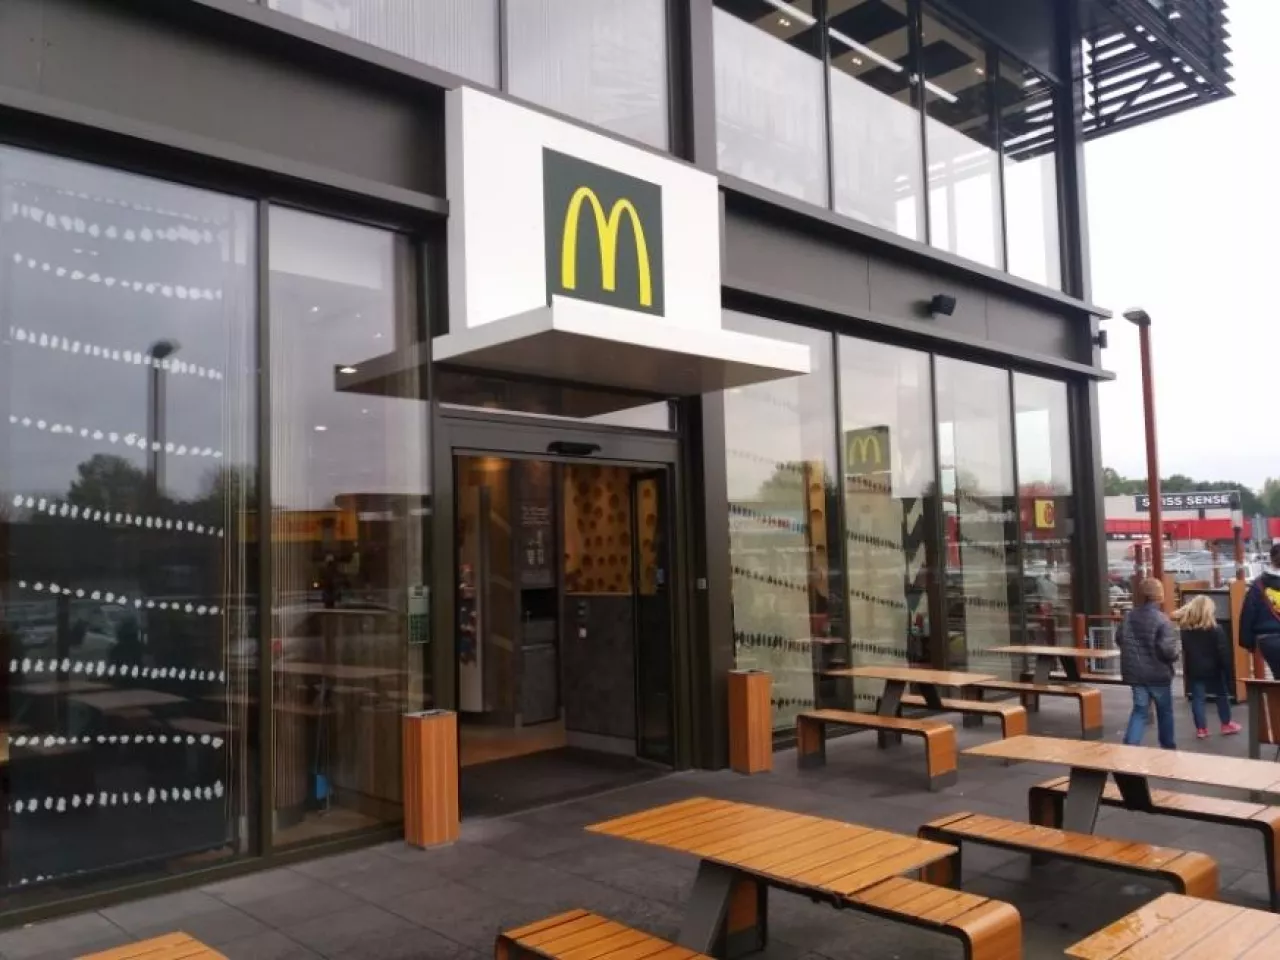 McDonald‘s w Enschede, Holandia (fot. Bartek Kaszuba)